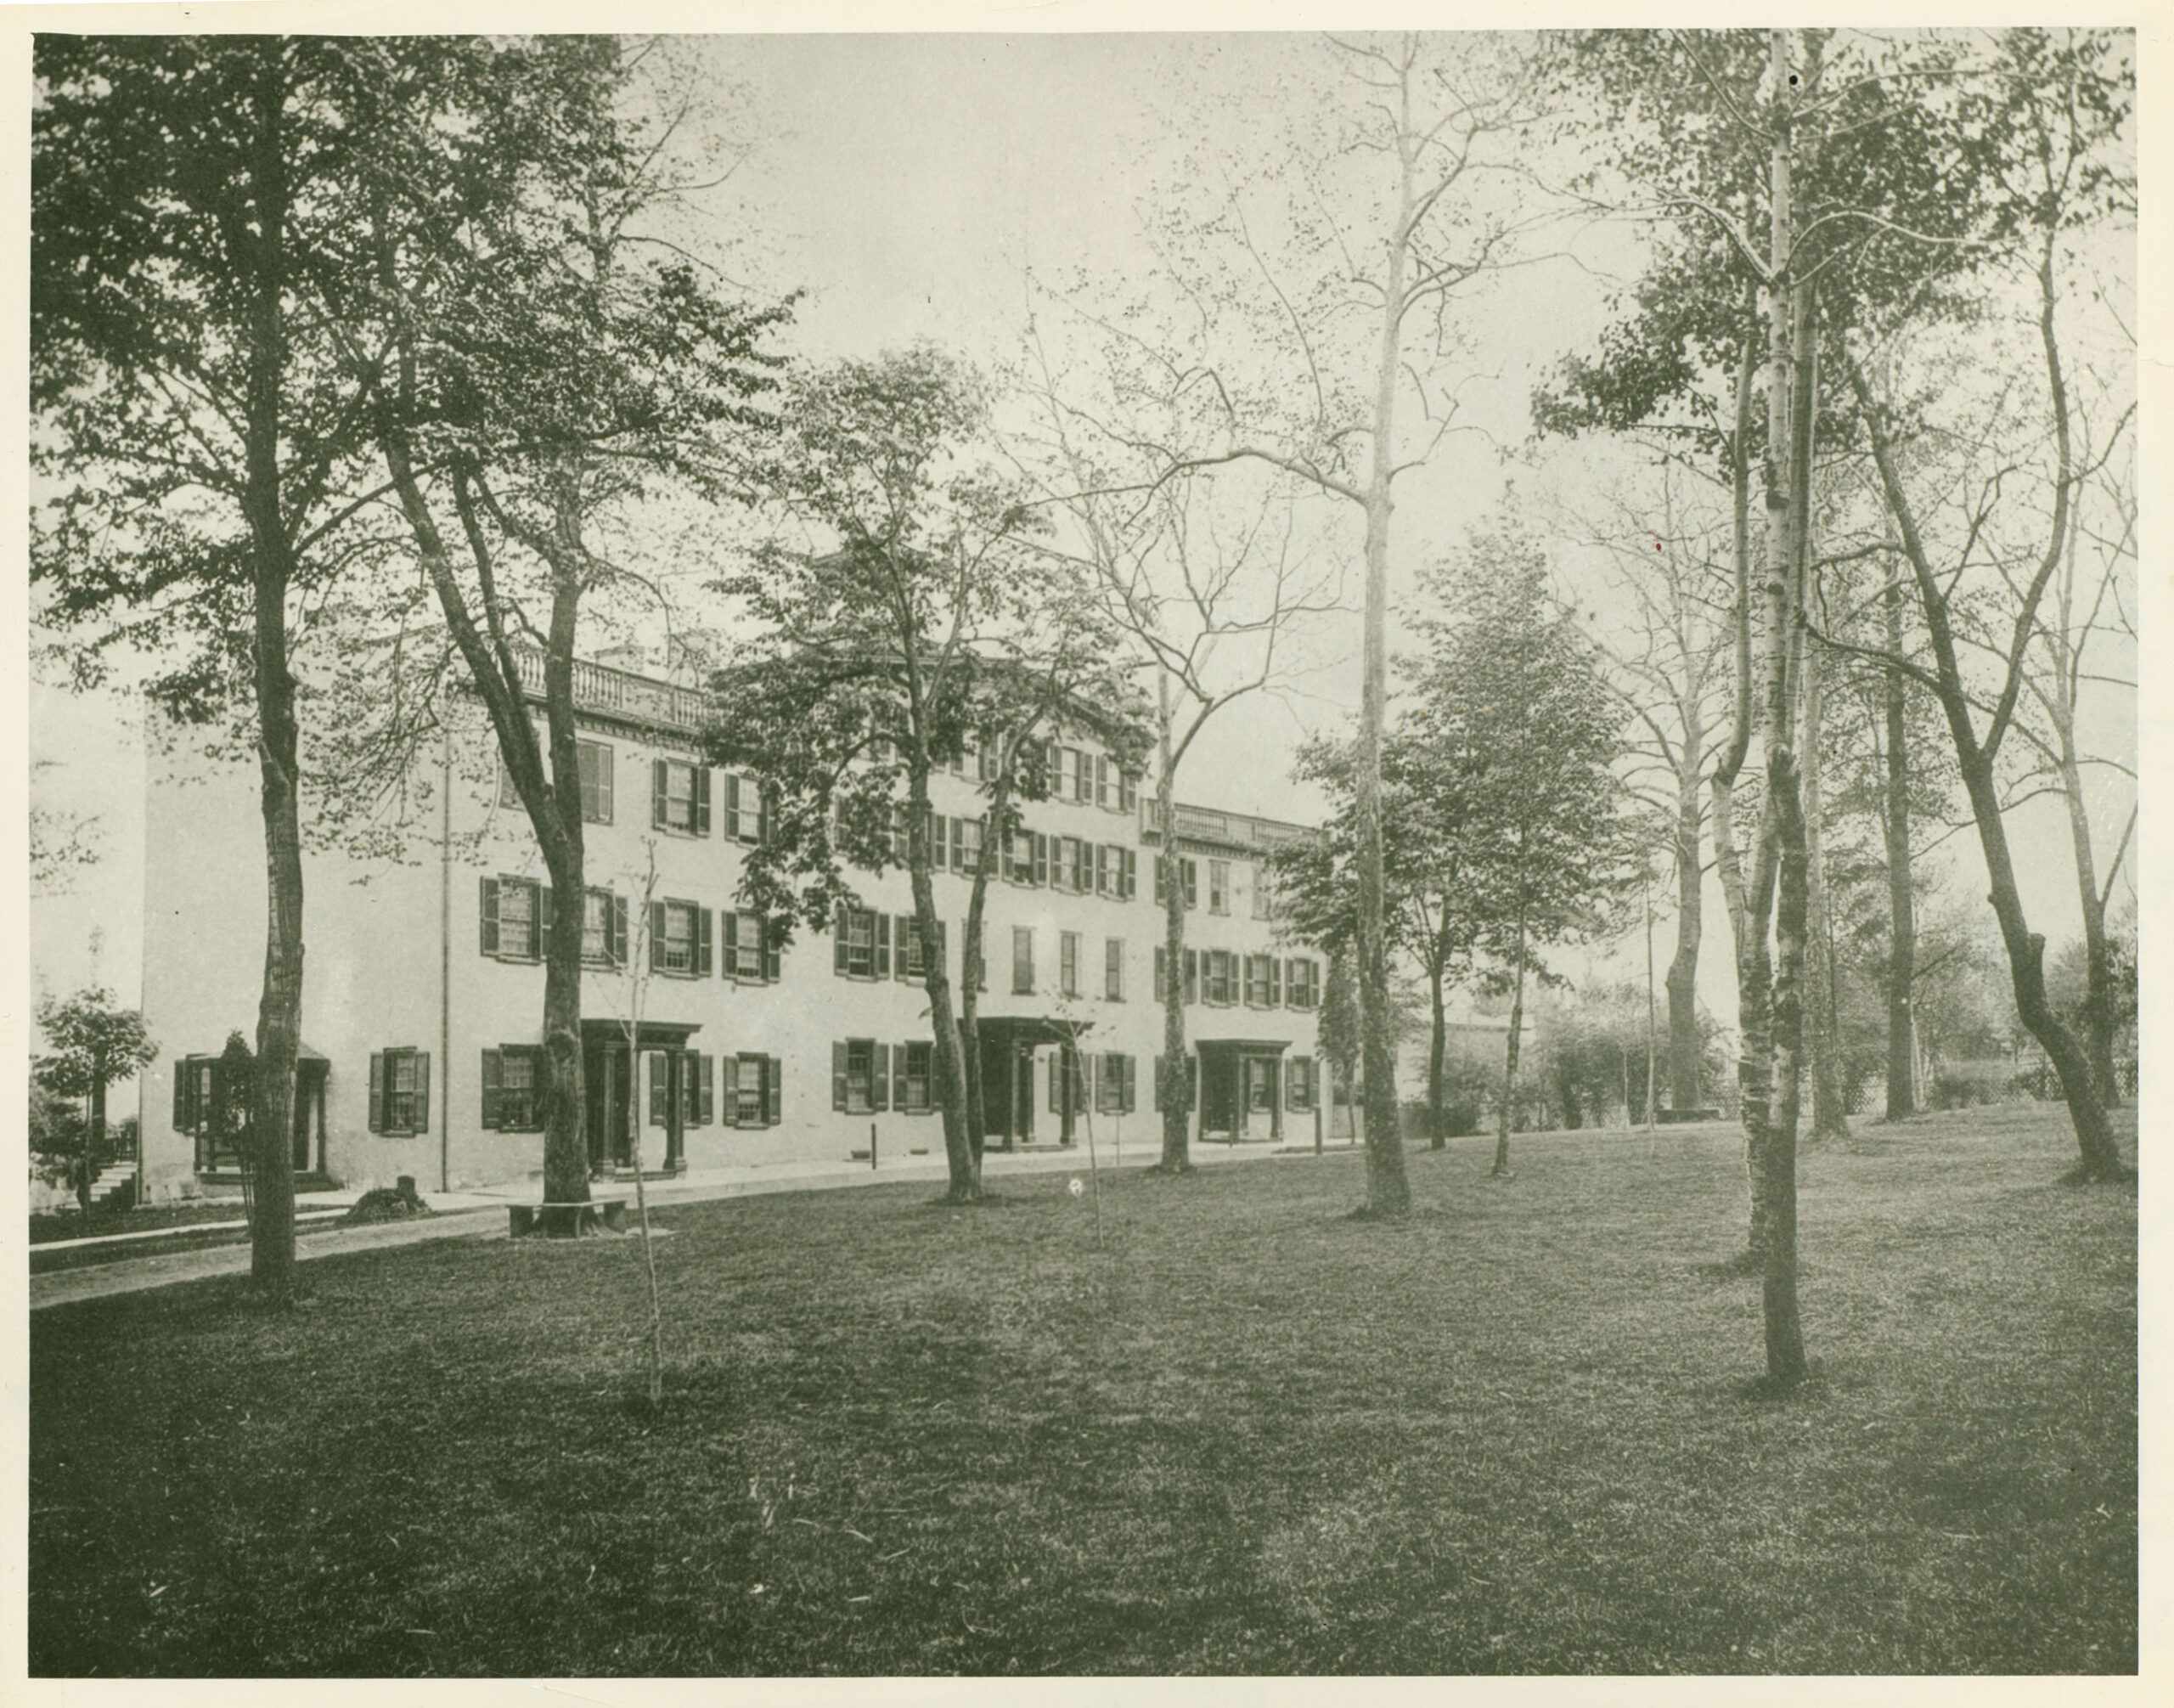 Trout Hall, circa 1870